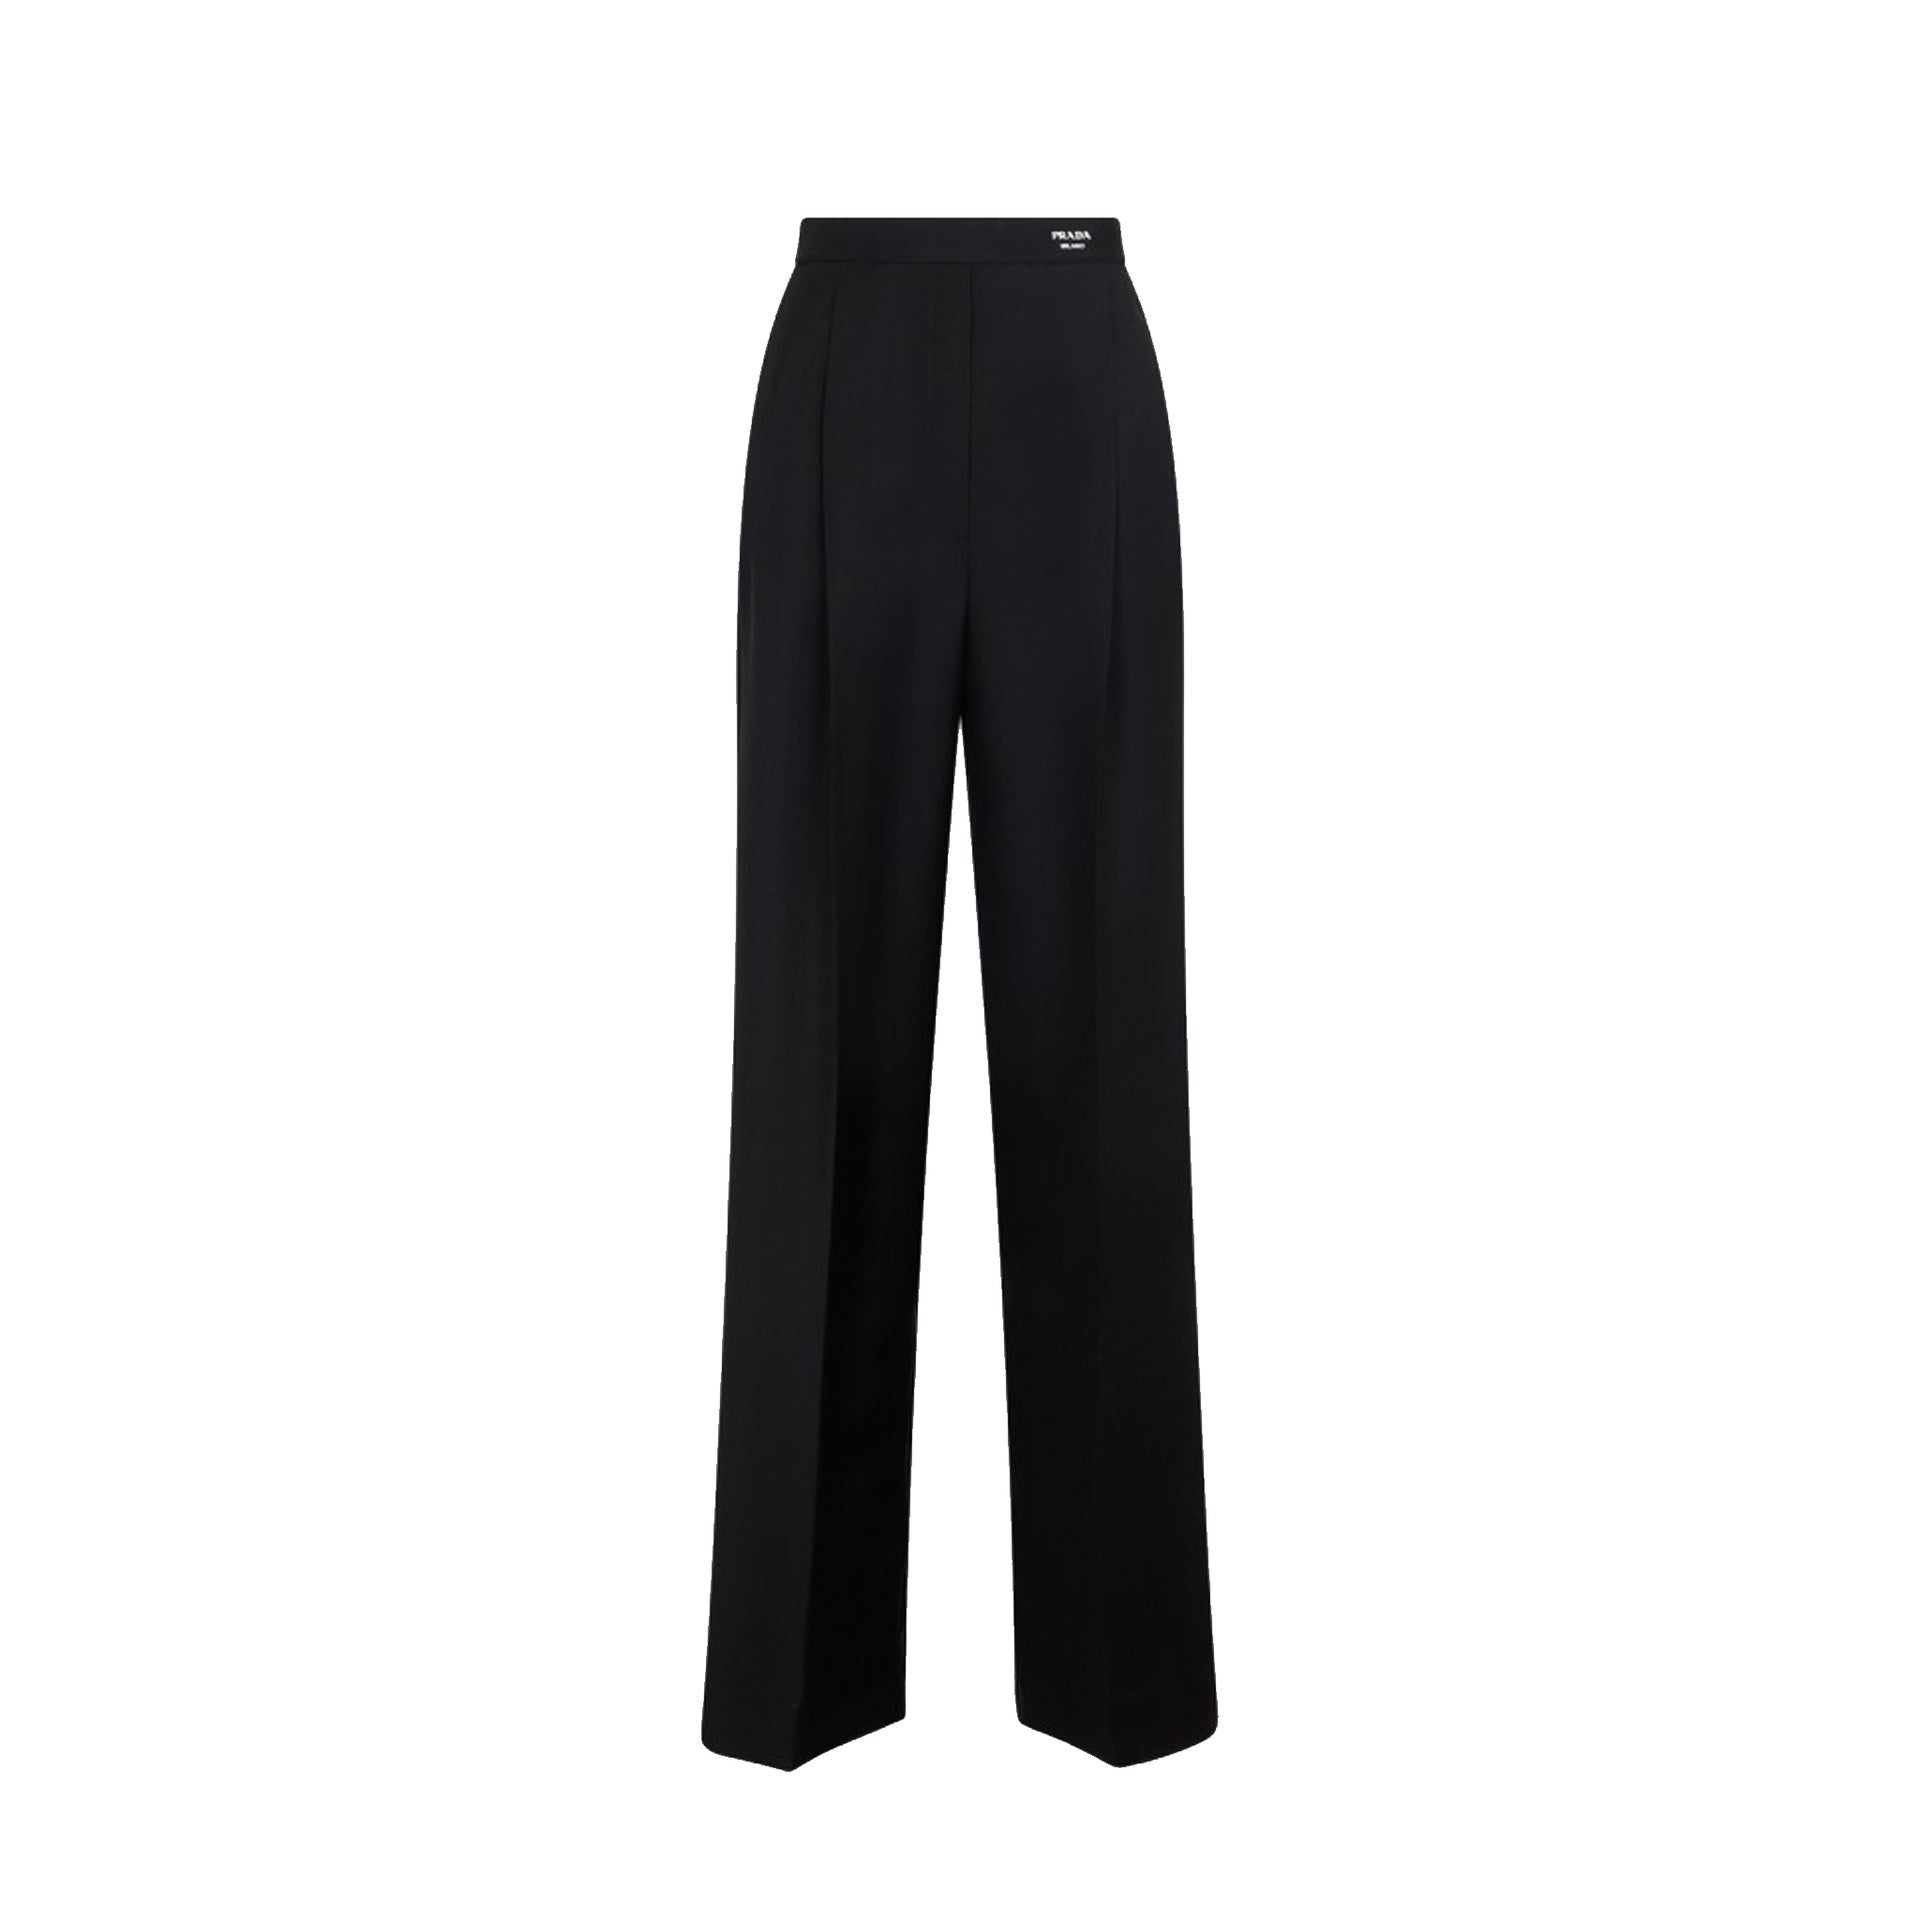 PRADA-Outlet-Sale-Prada Mohair and Wool Pants-WOMEN CLOTHING-BLACK-42-ARCHIVIST